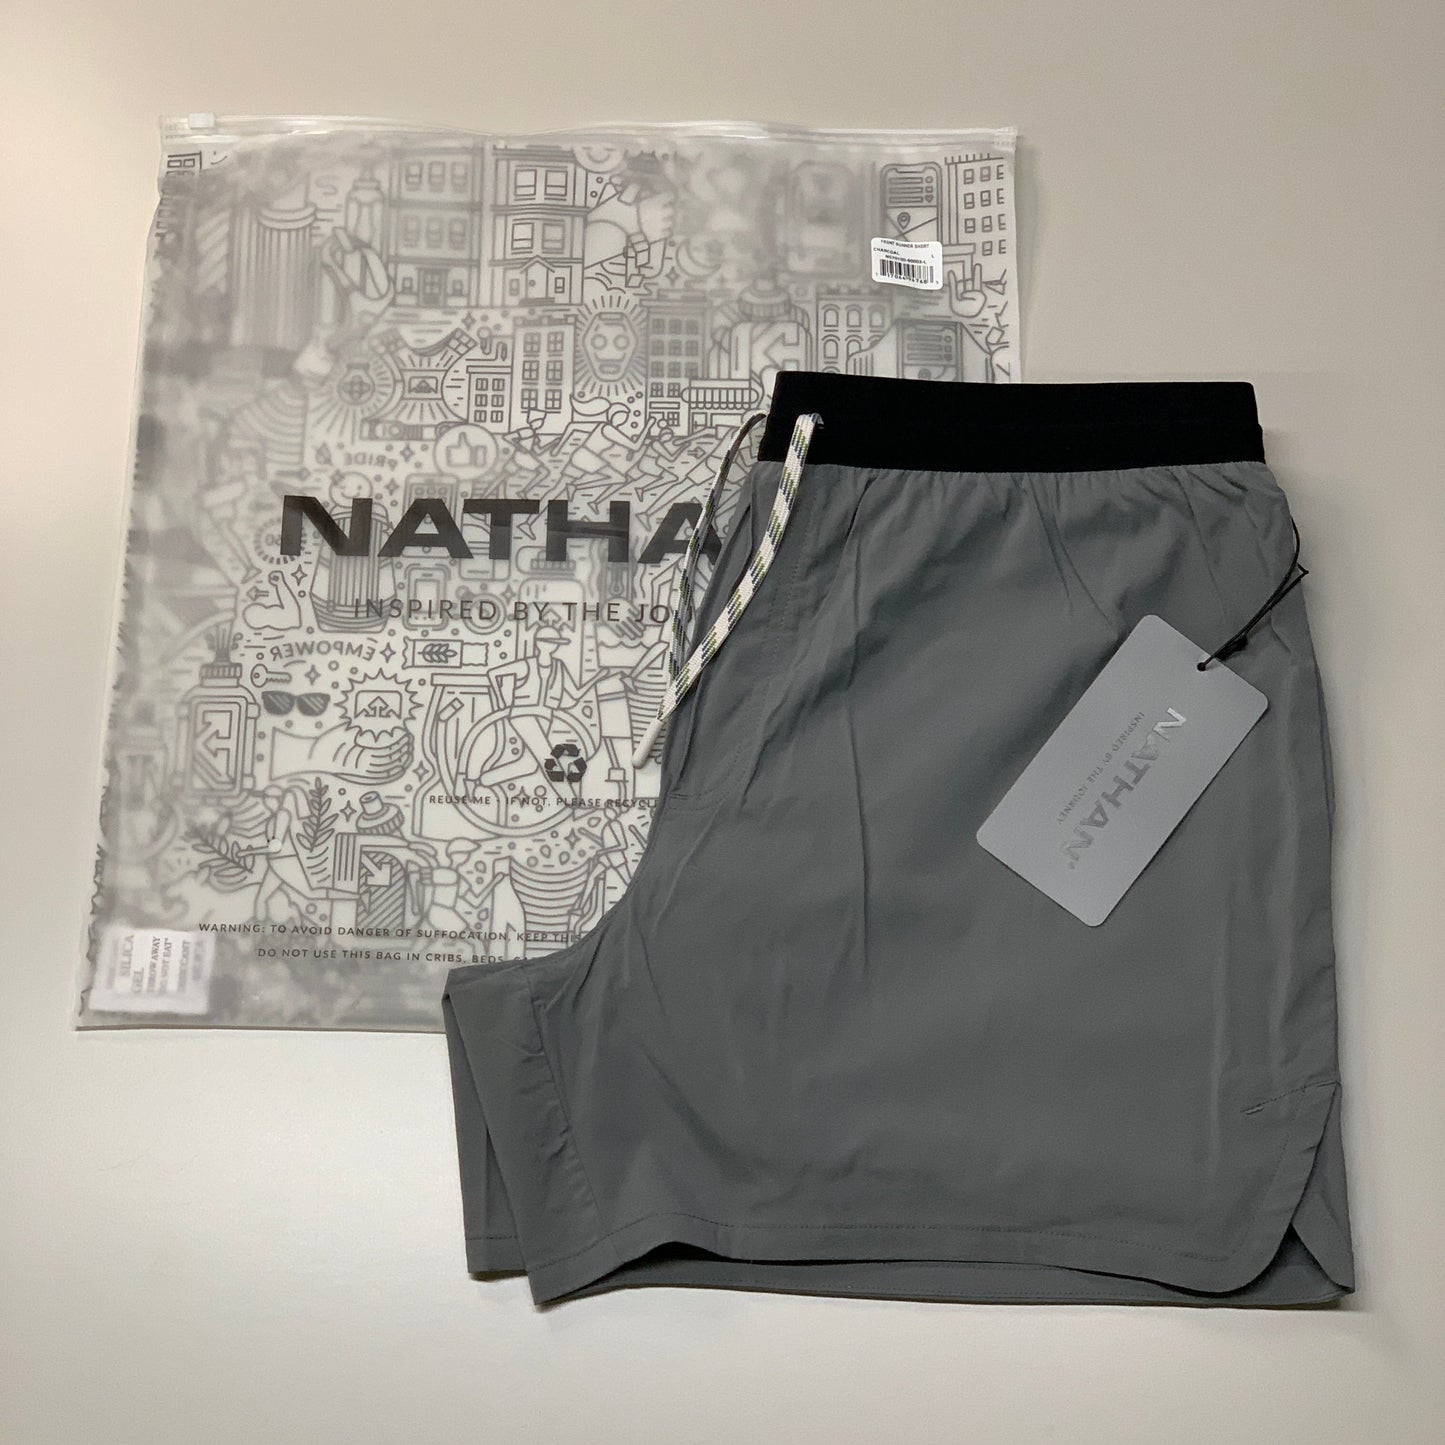 NATHAN Front Runner Shorts 5" Inseam Men's Charcoal Size XL NS70100-80003-XL